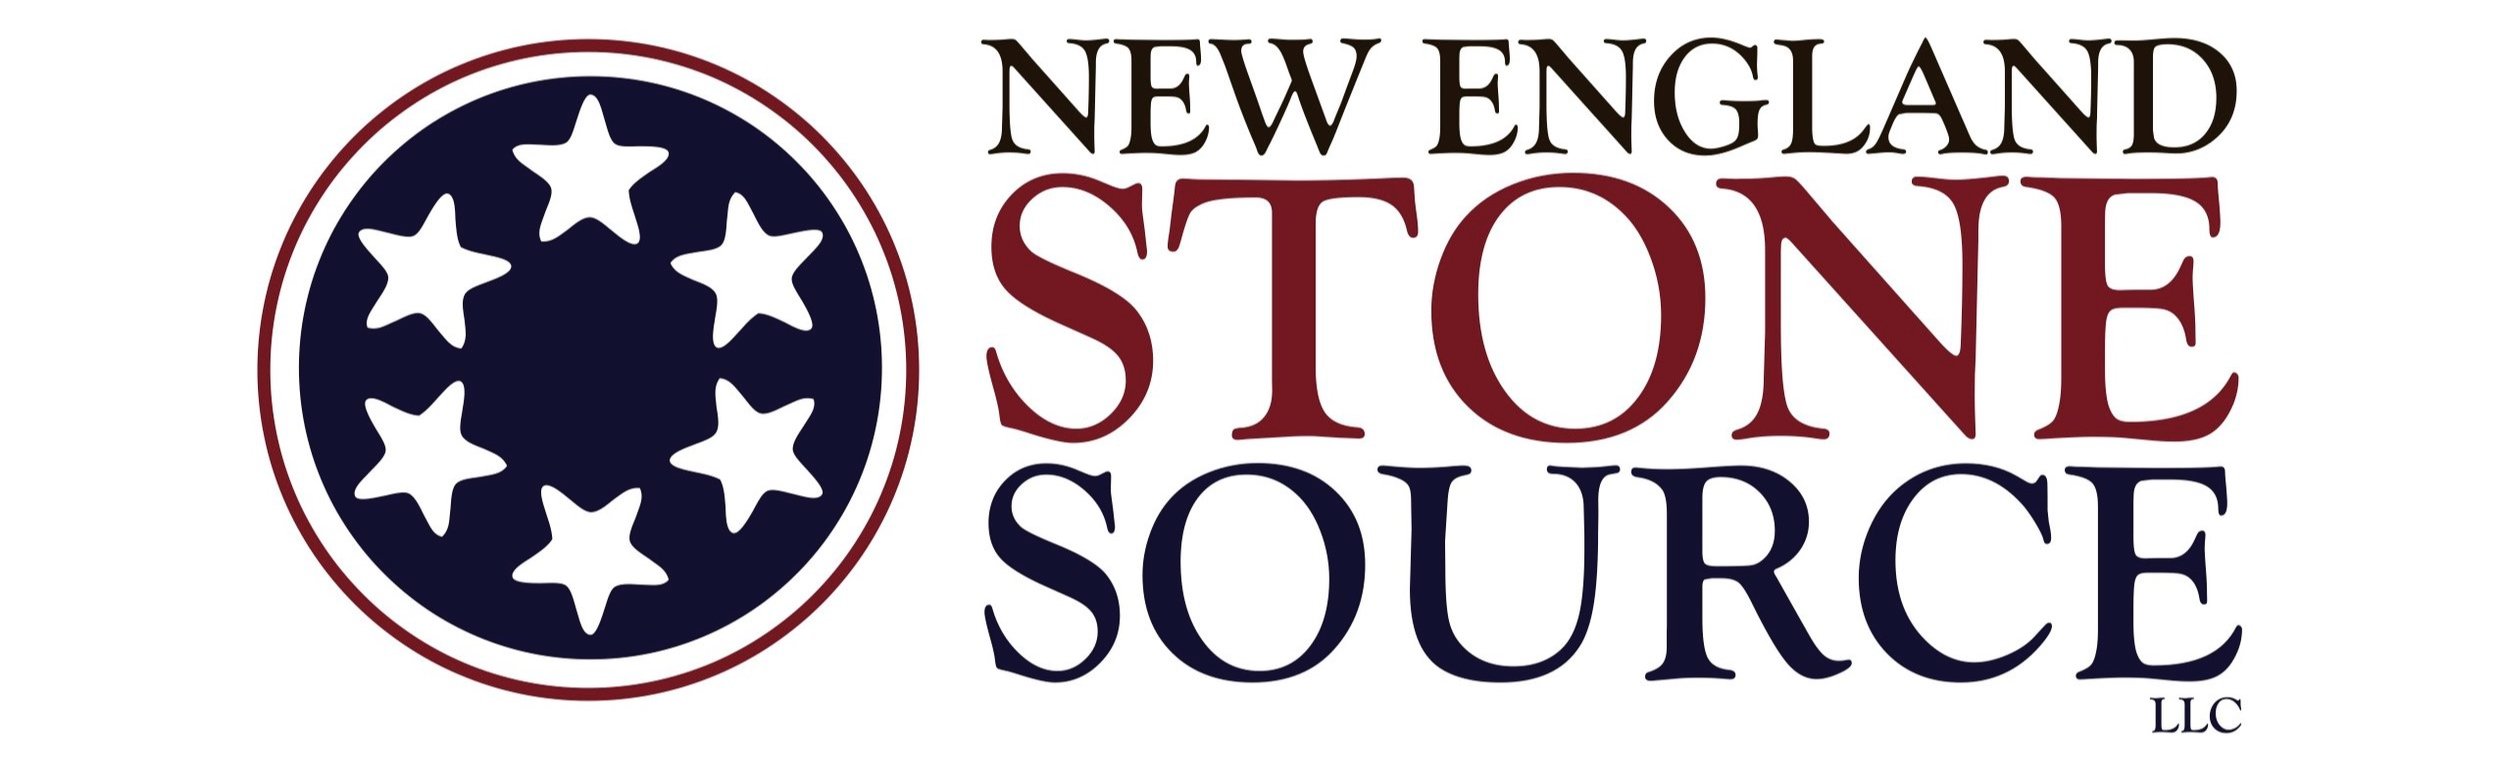 New England Stone Source LLC